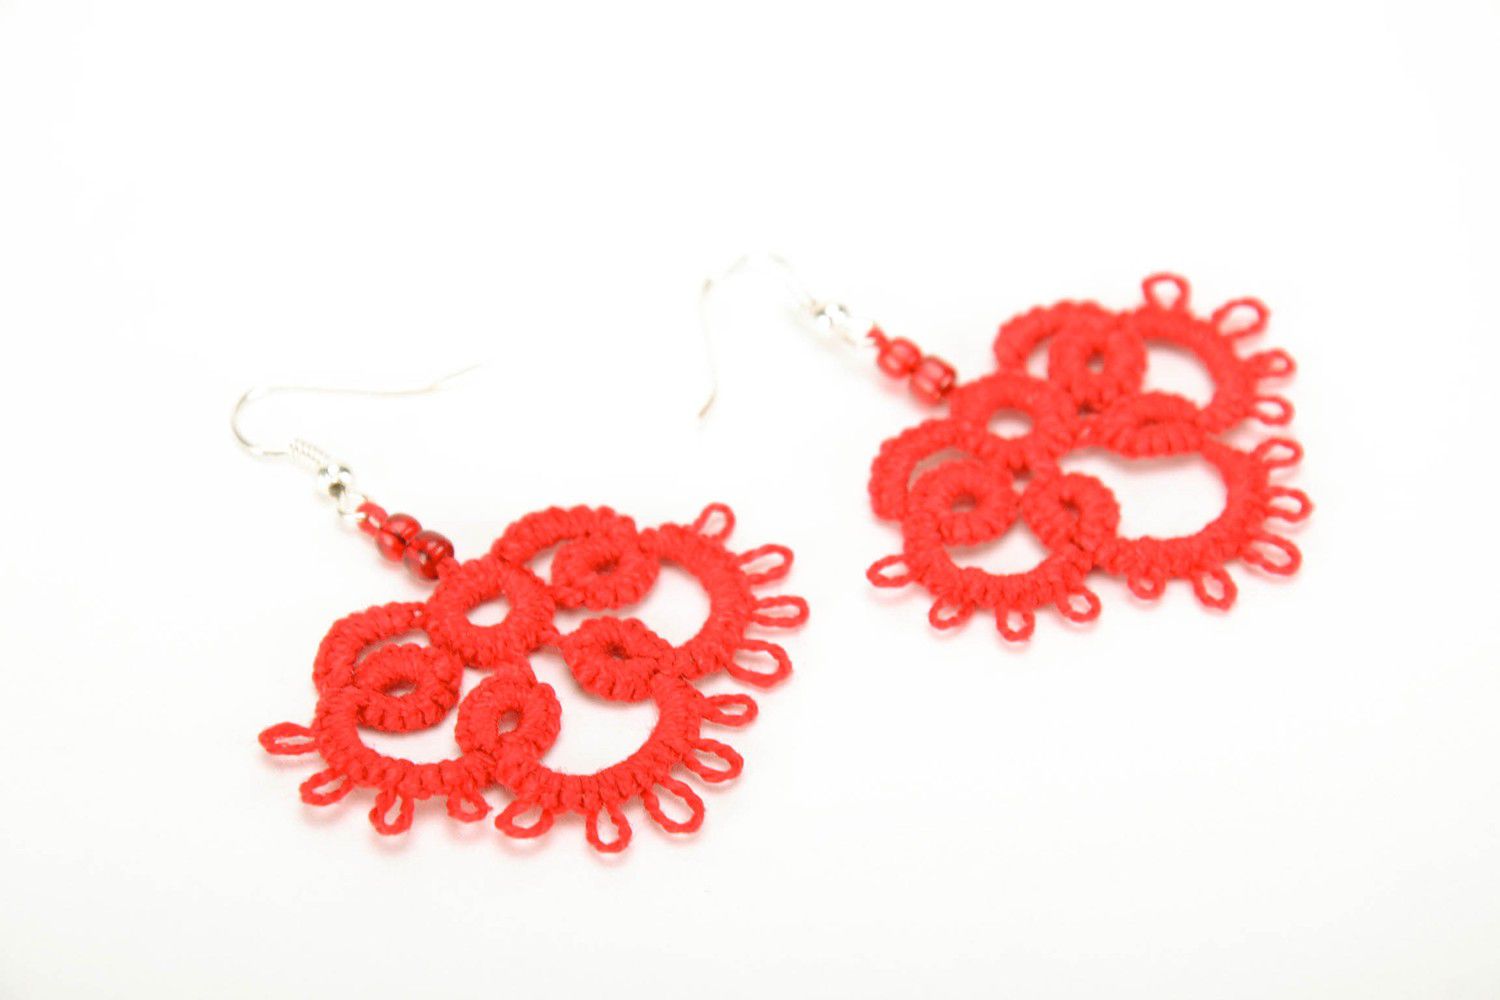 Handmade lace earrings photo 3